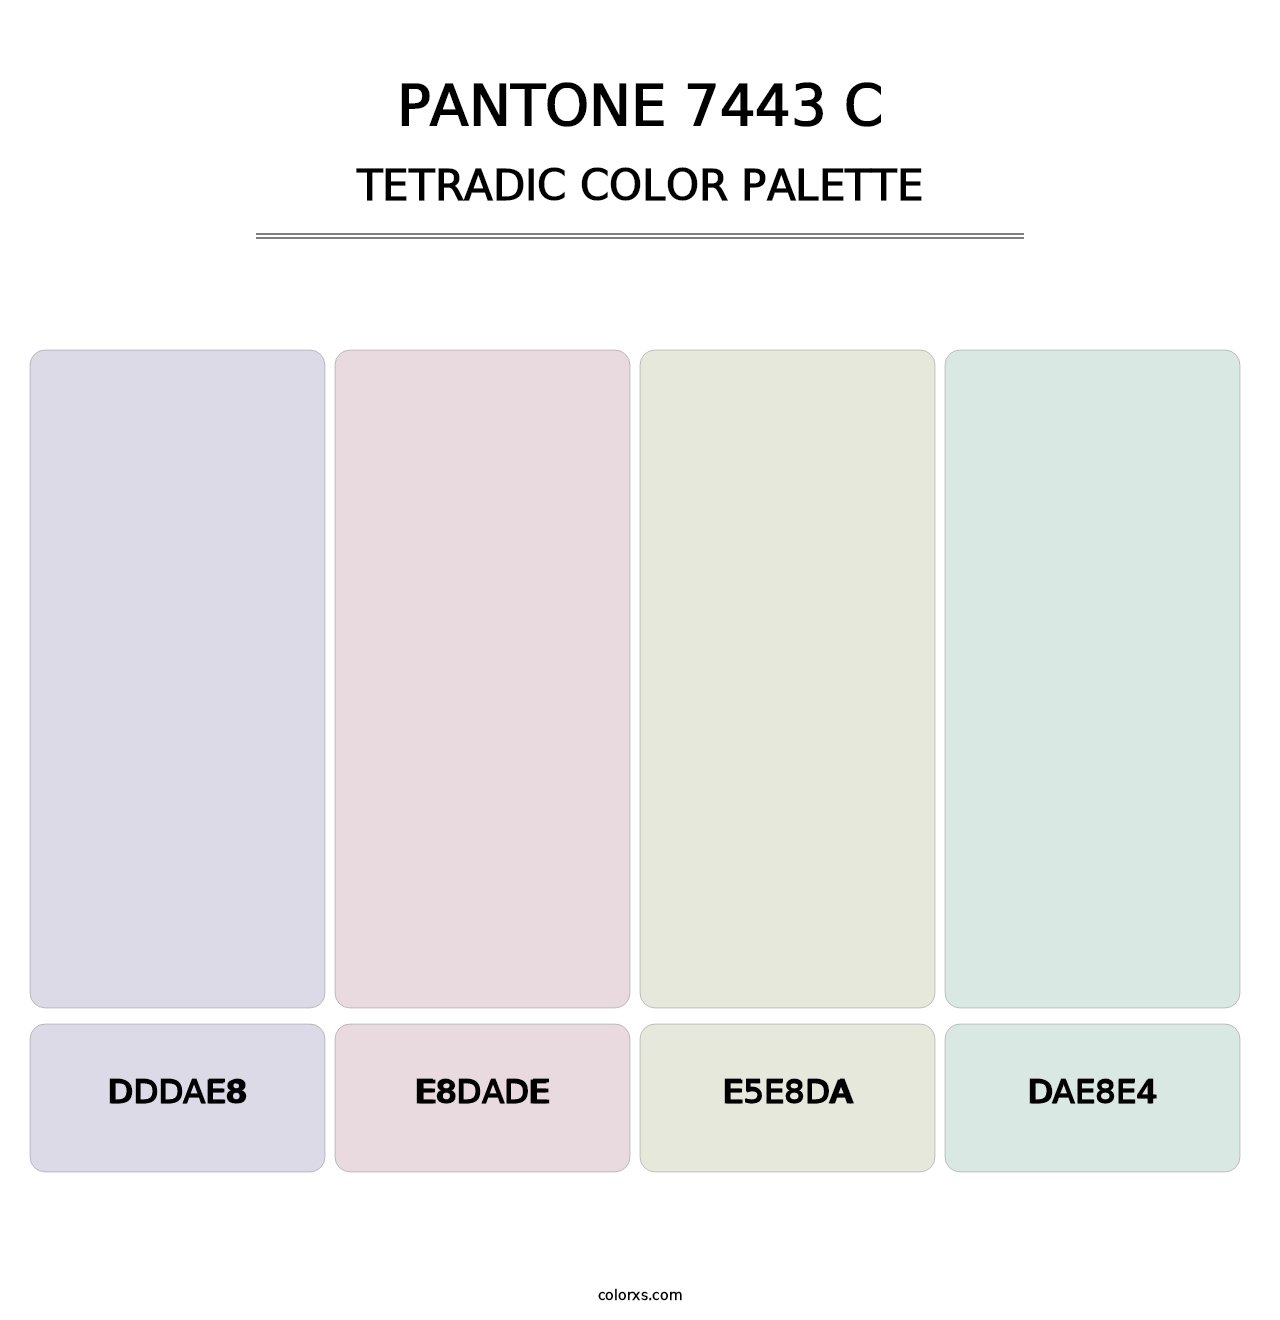 PANTONE 7443 C - Tetradic Color Palette